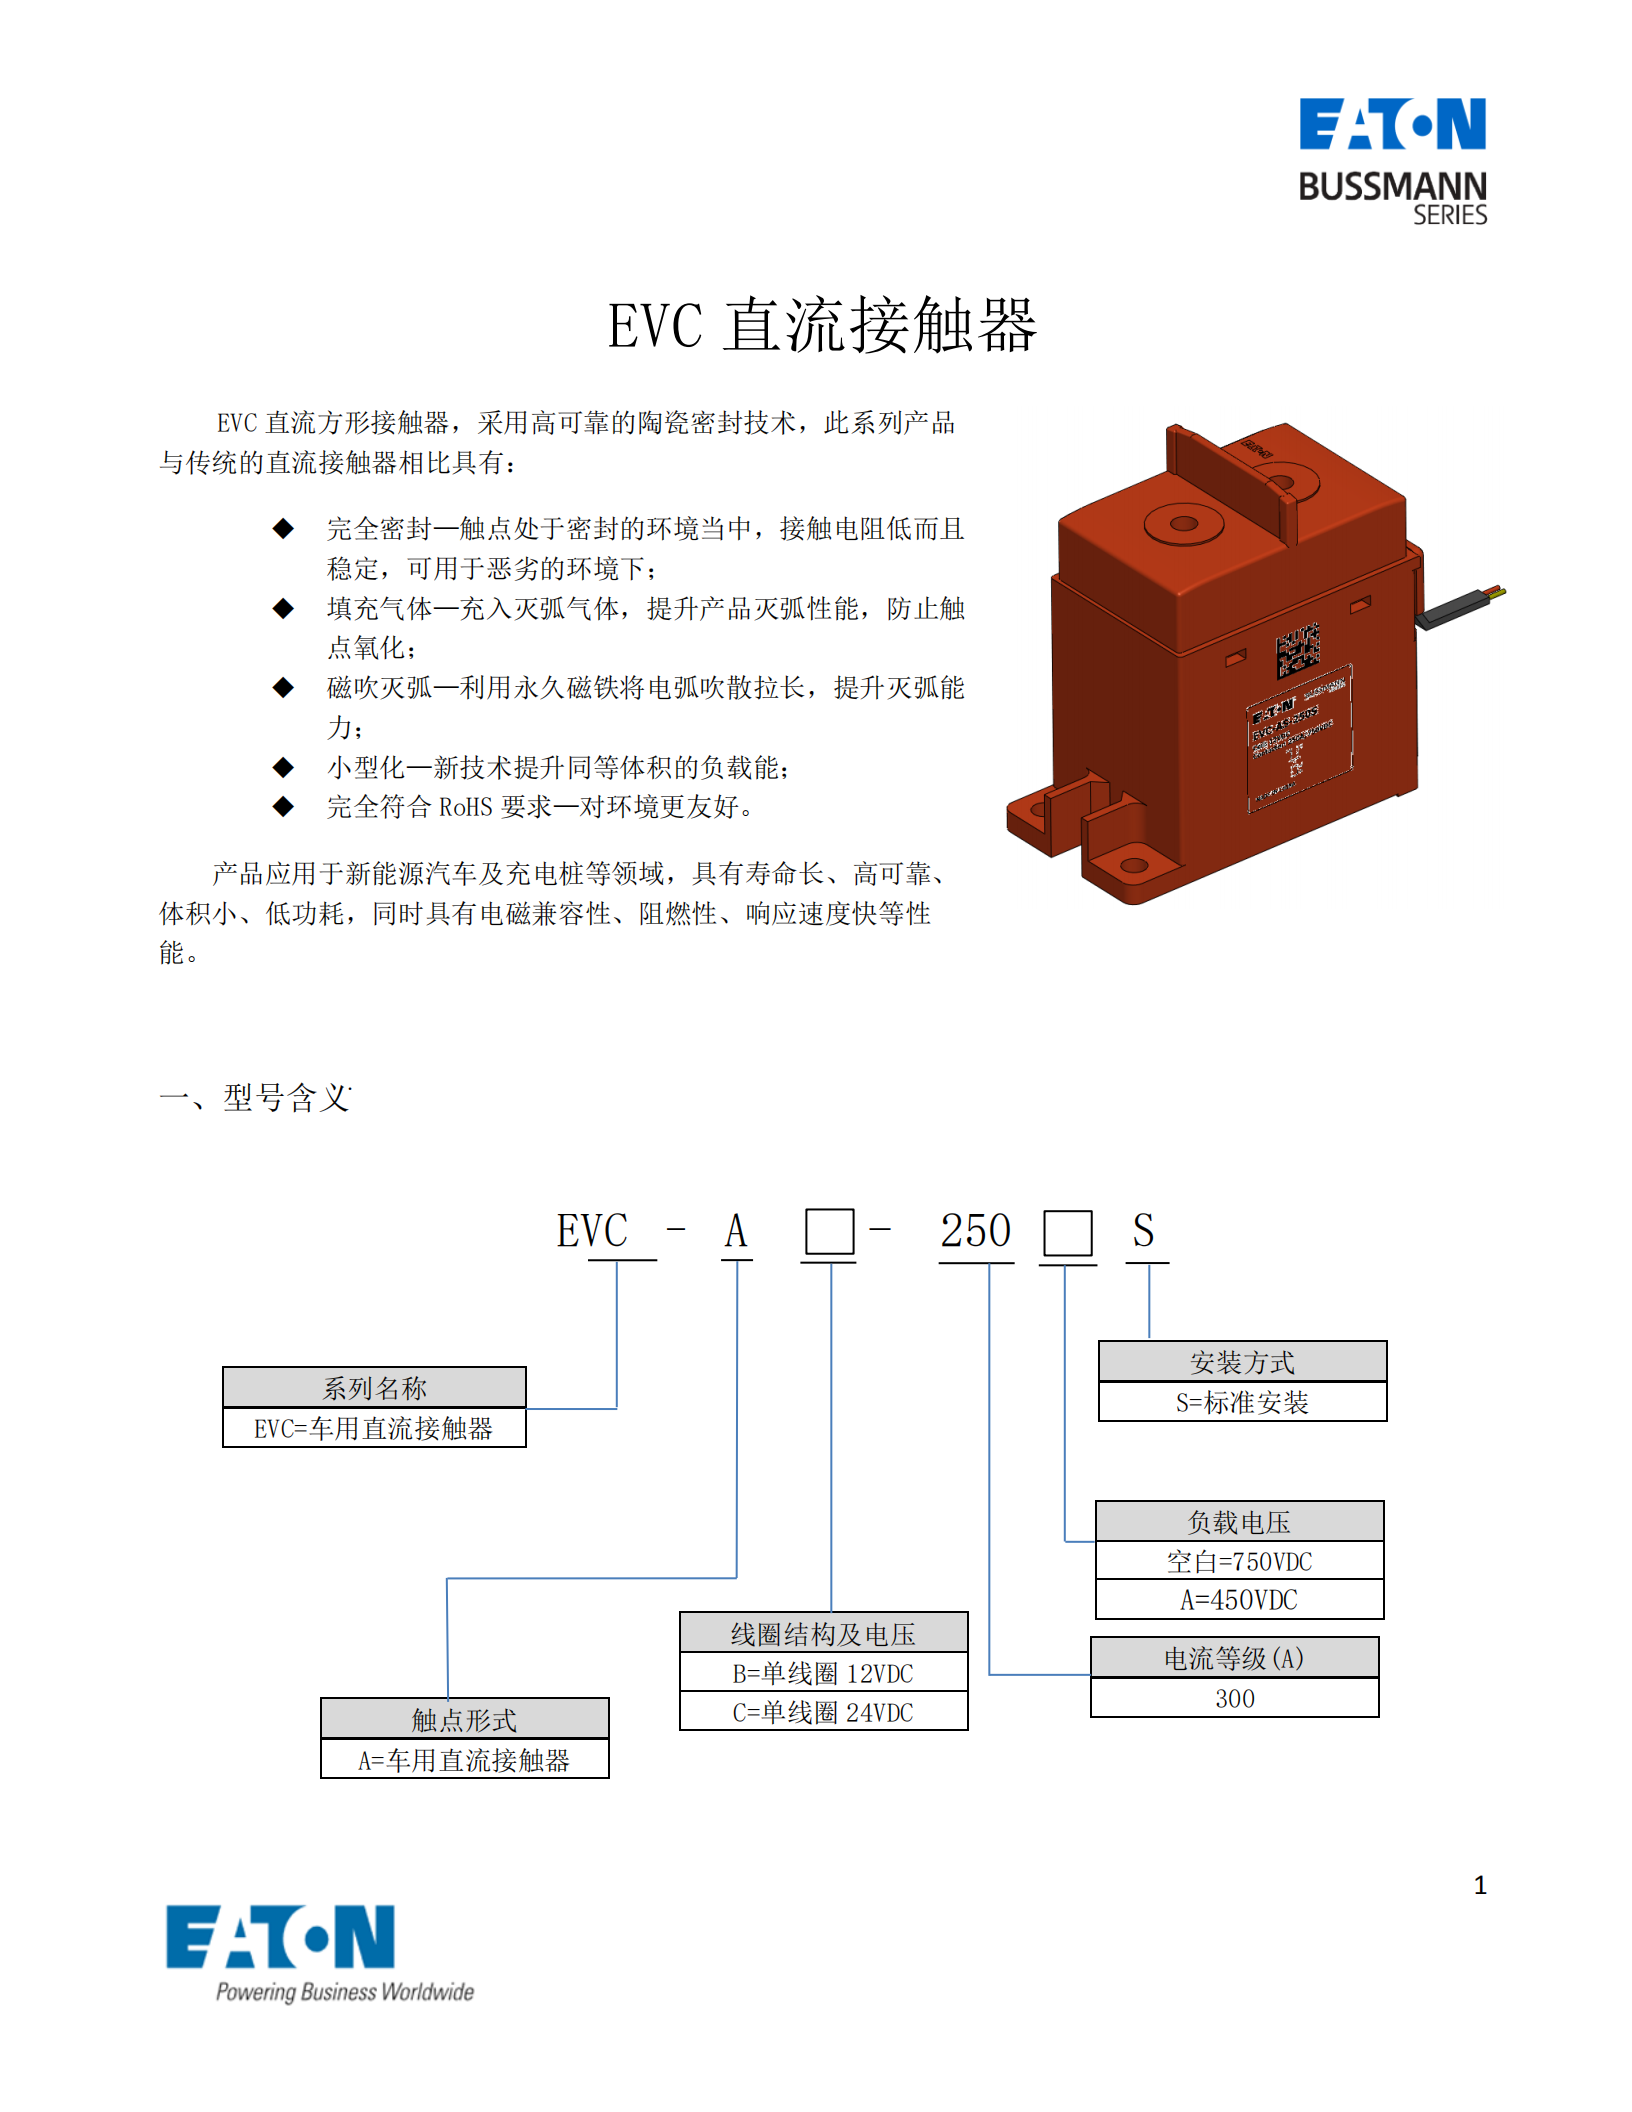 EVC-AB-250S直流接觸器